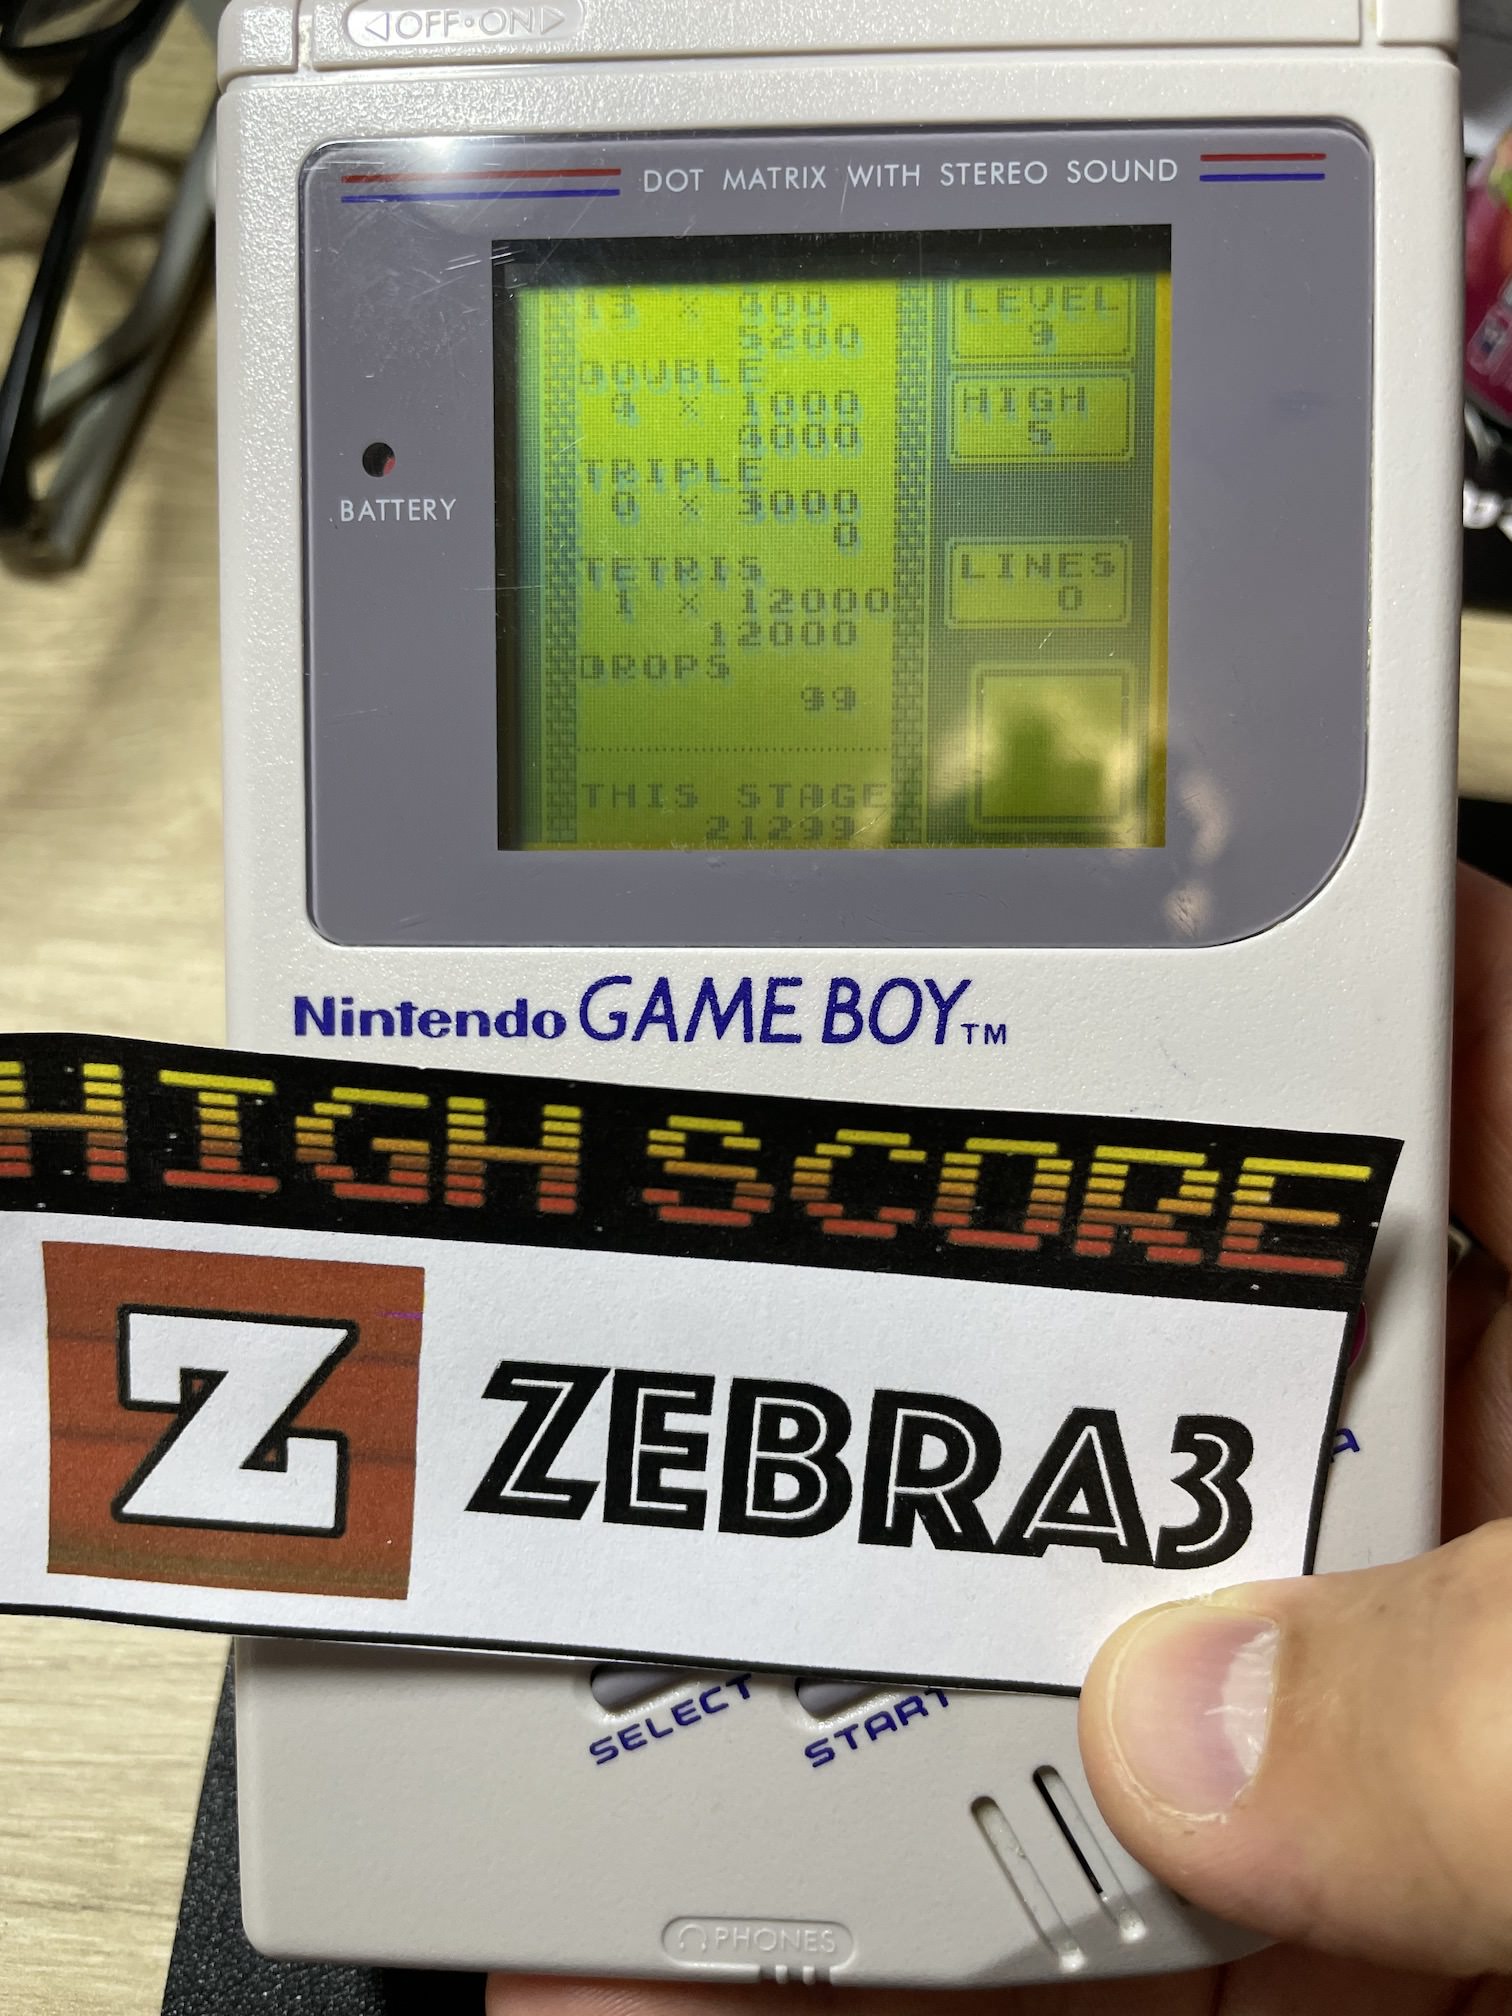 Zebra3: Tetris: Type B [Level 9 / High 5] (Game Boy) 21,299 points on 2023-05-31 10:20:40